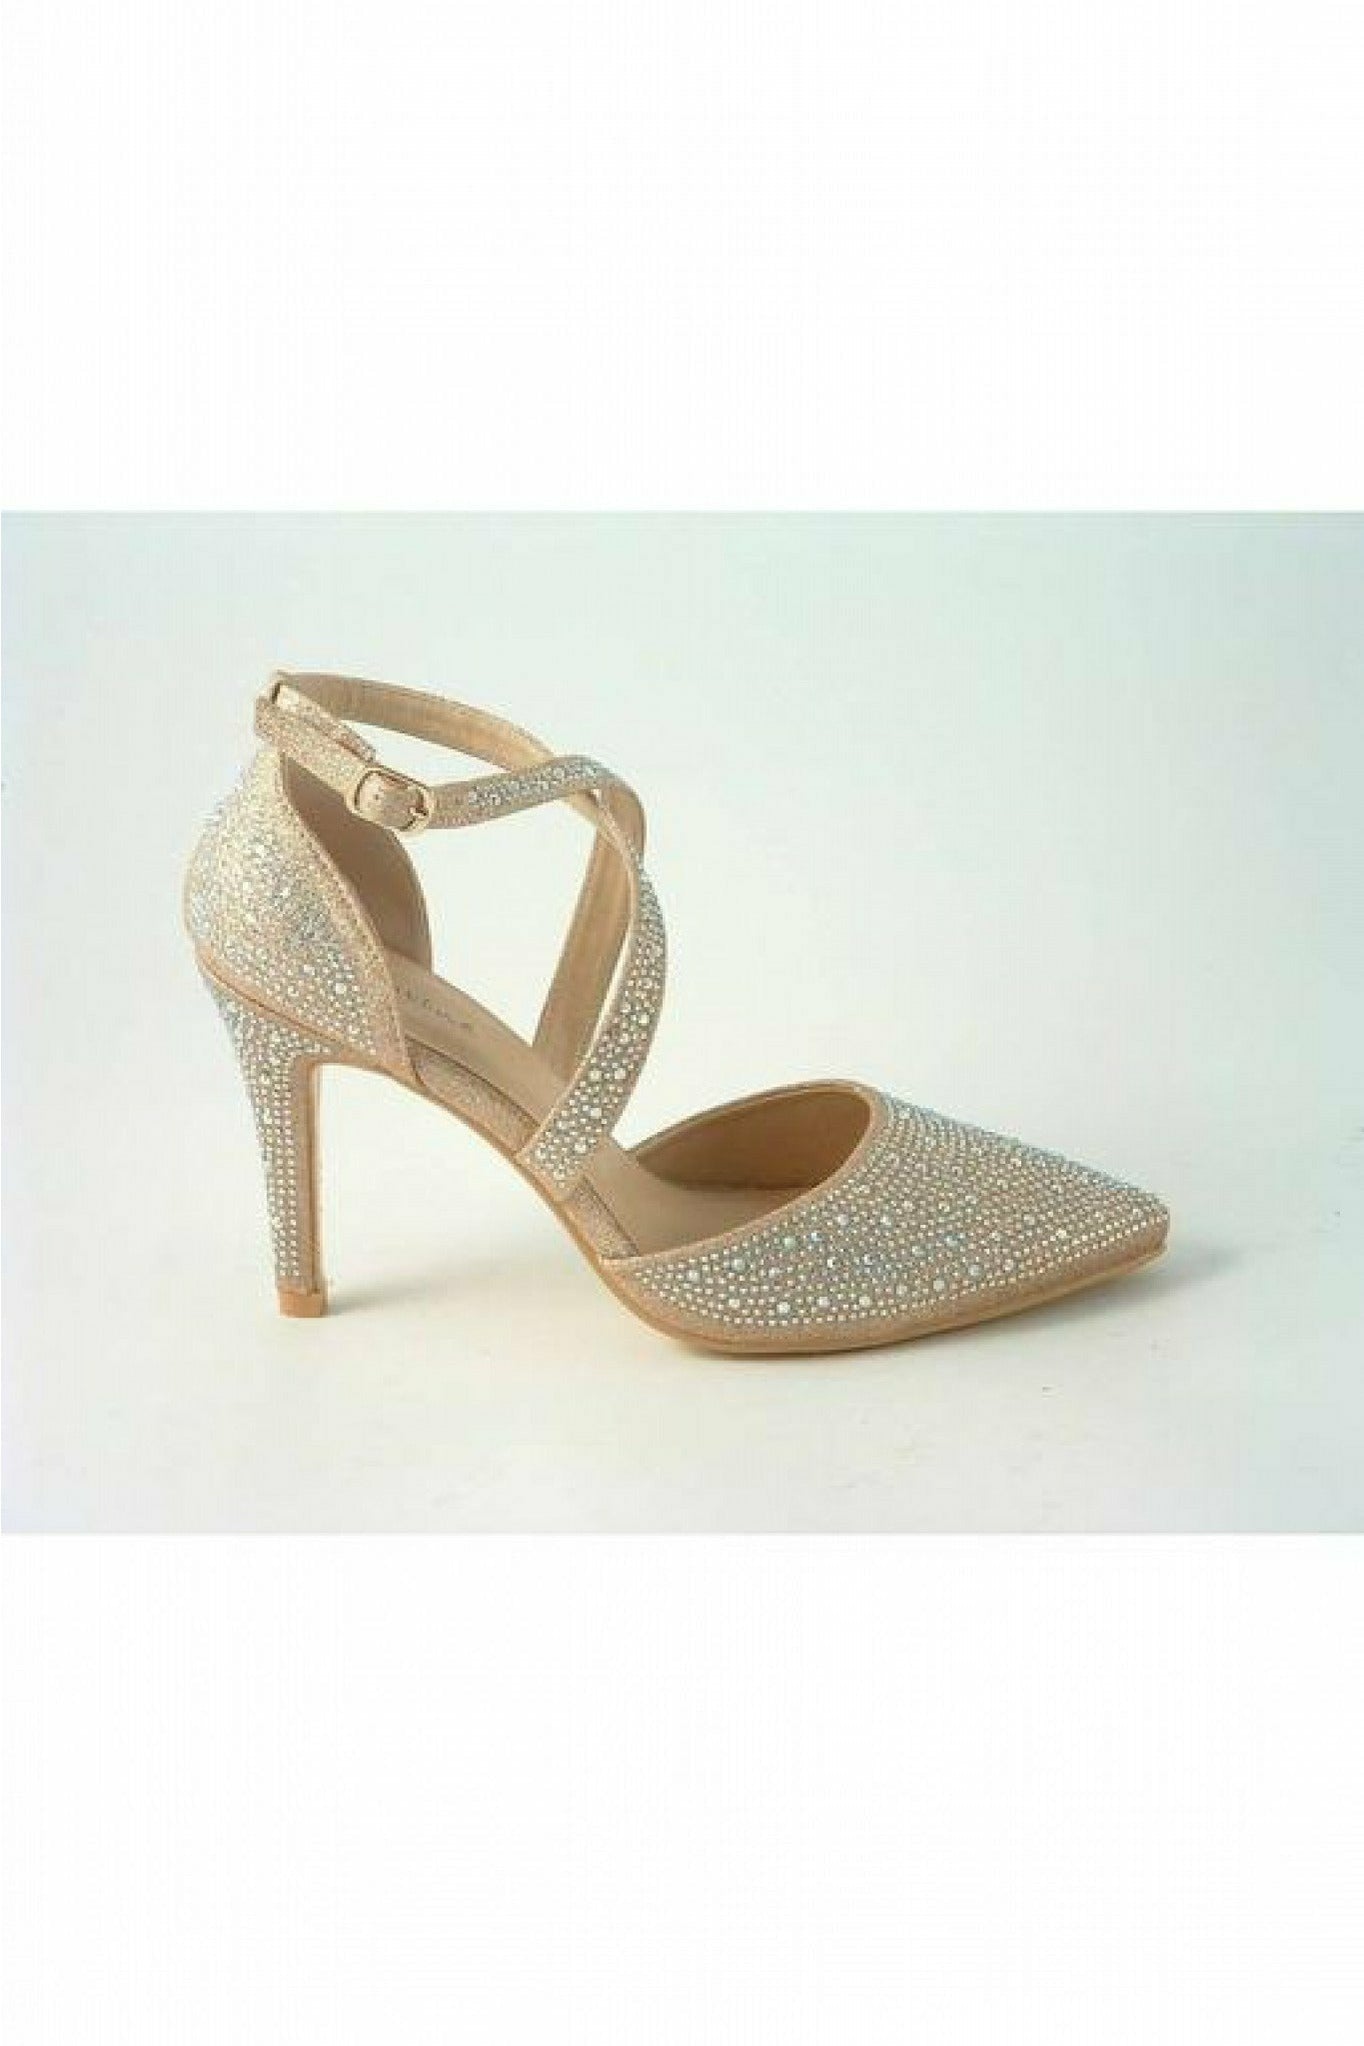 Clora Sabatine Diamante Strapped Court Shoe Clora